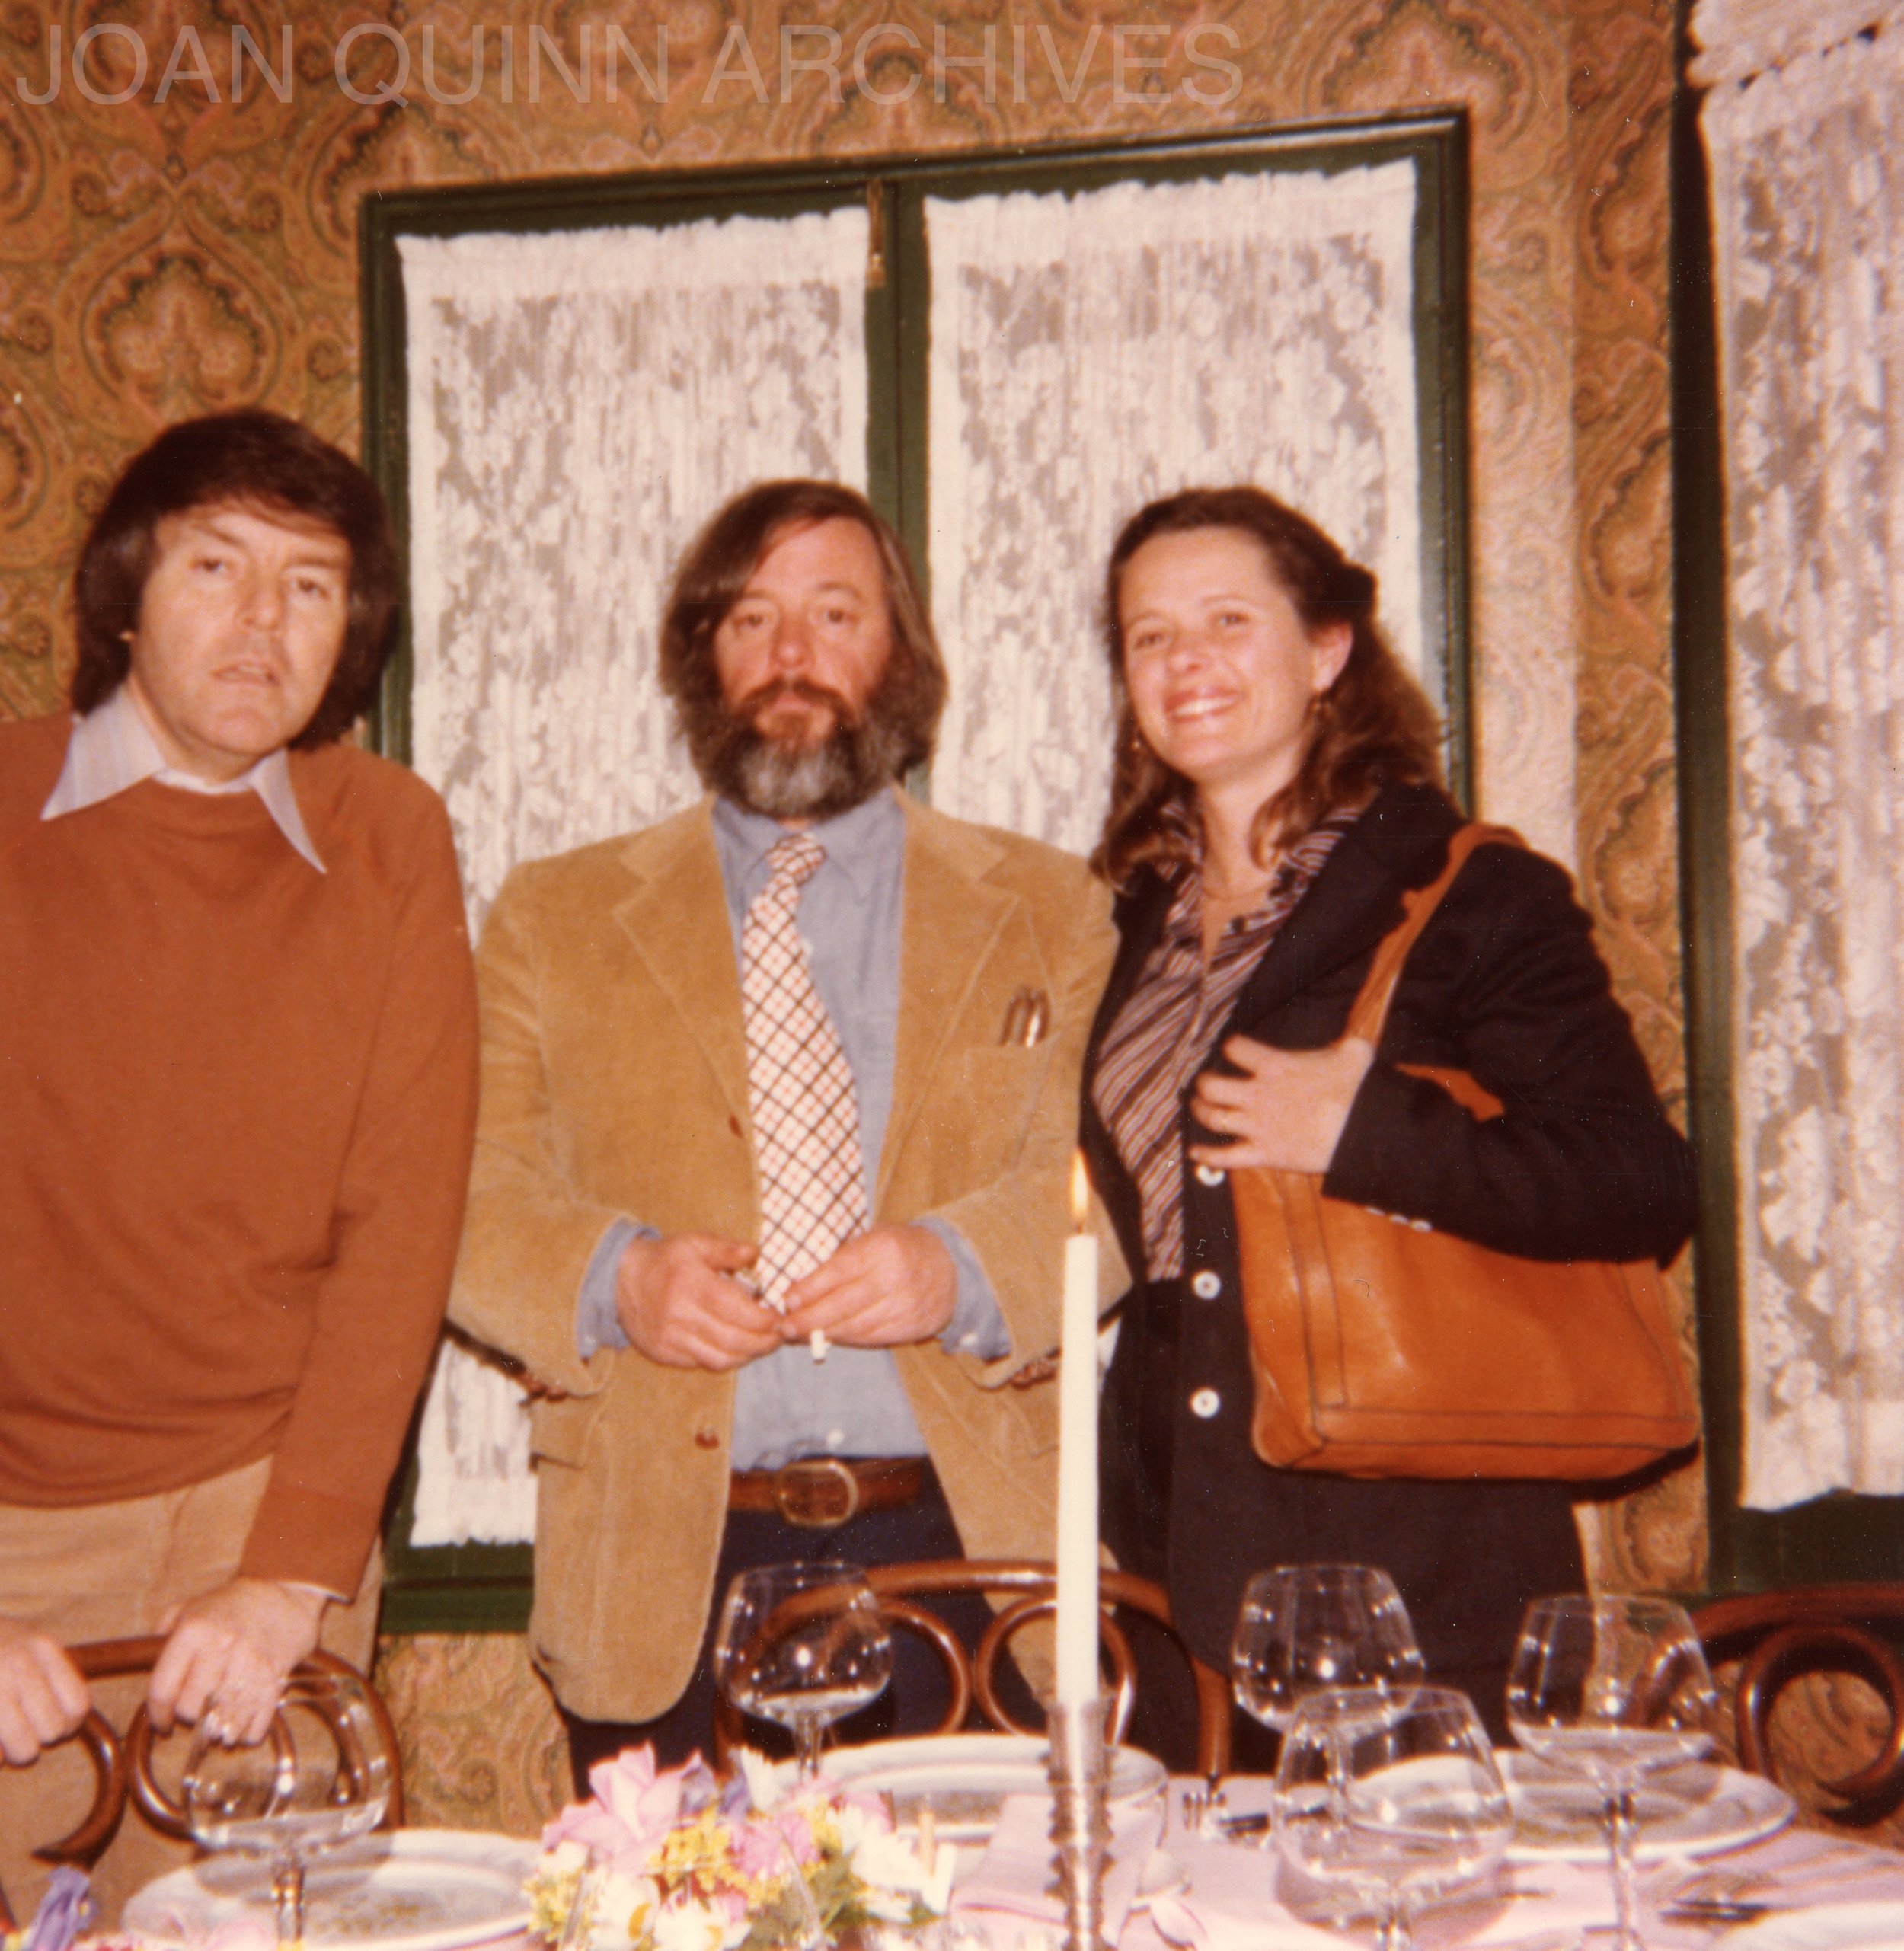 Jack Quinn, Ken and Happy Price, 1977.